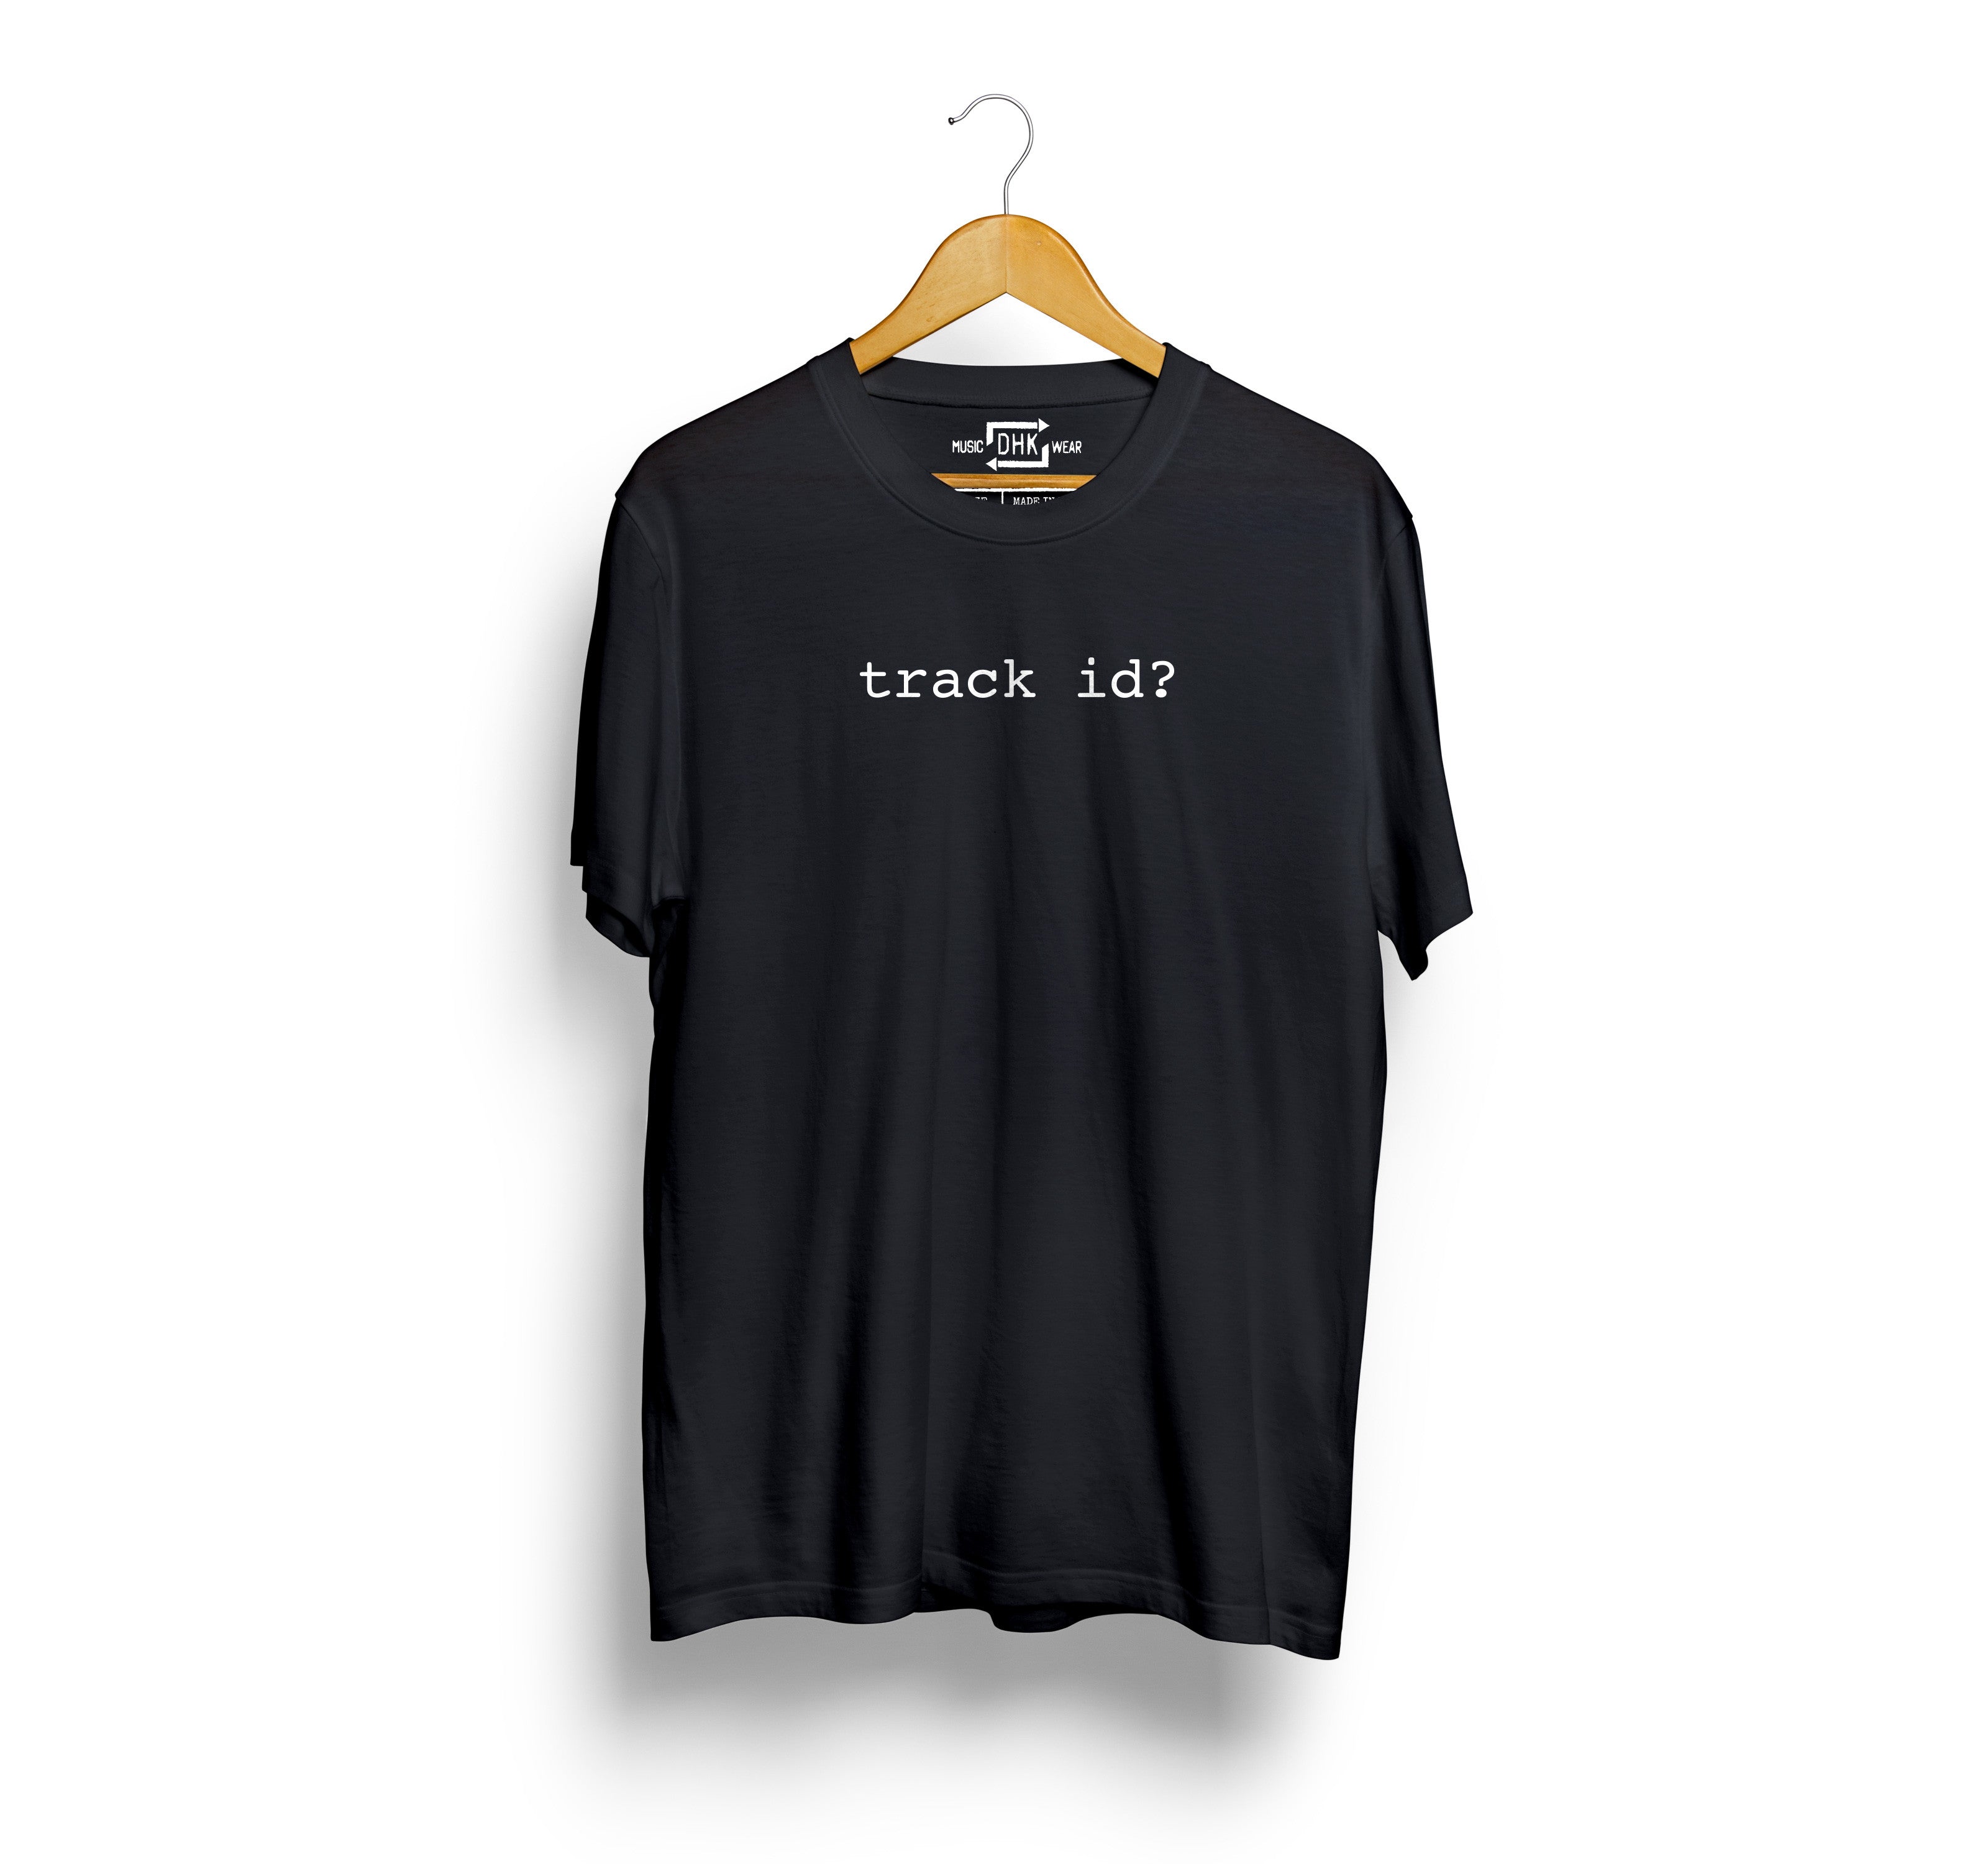 track id? techno t-shirt (black)